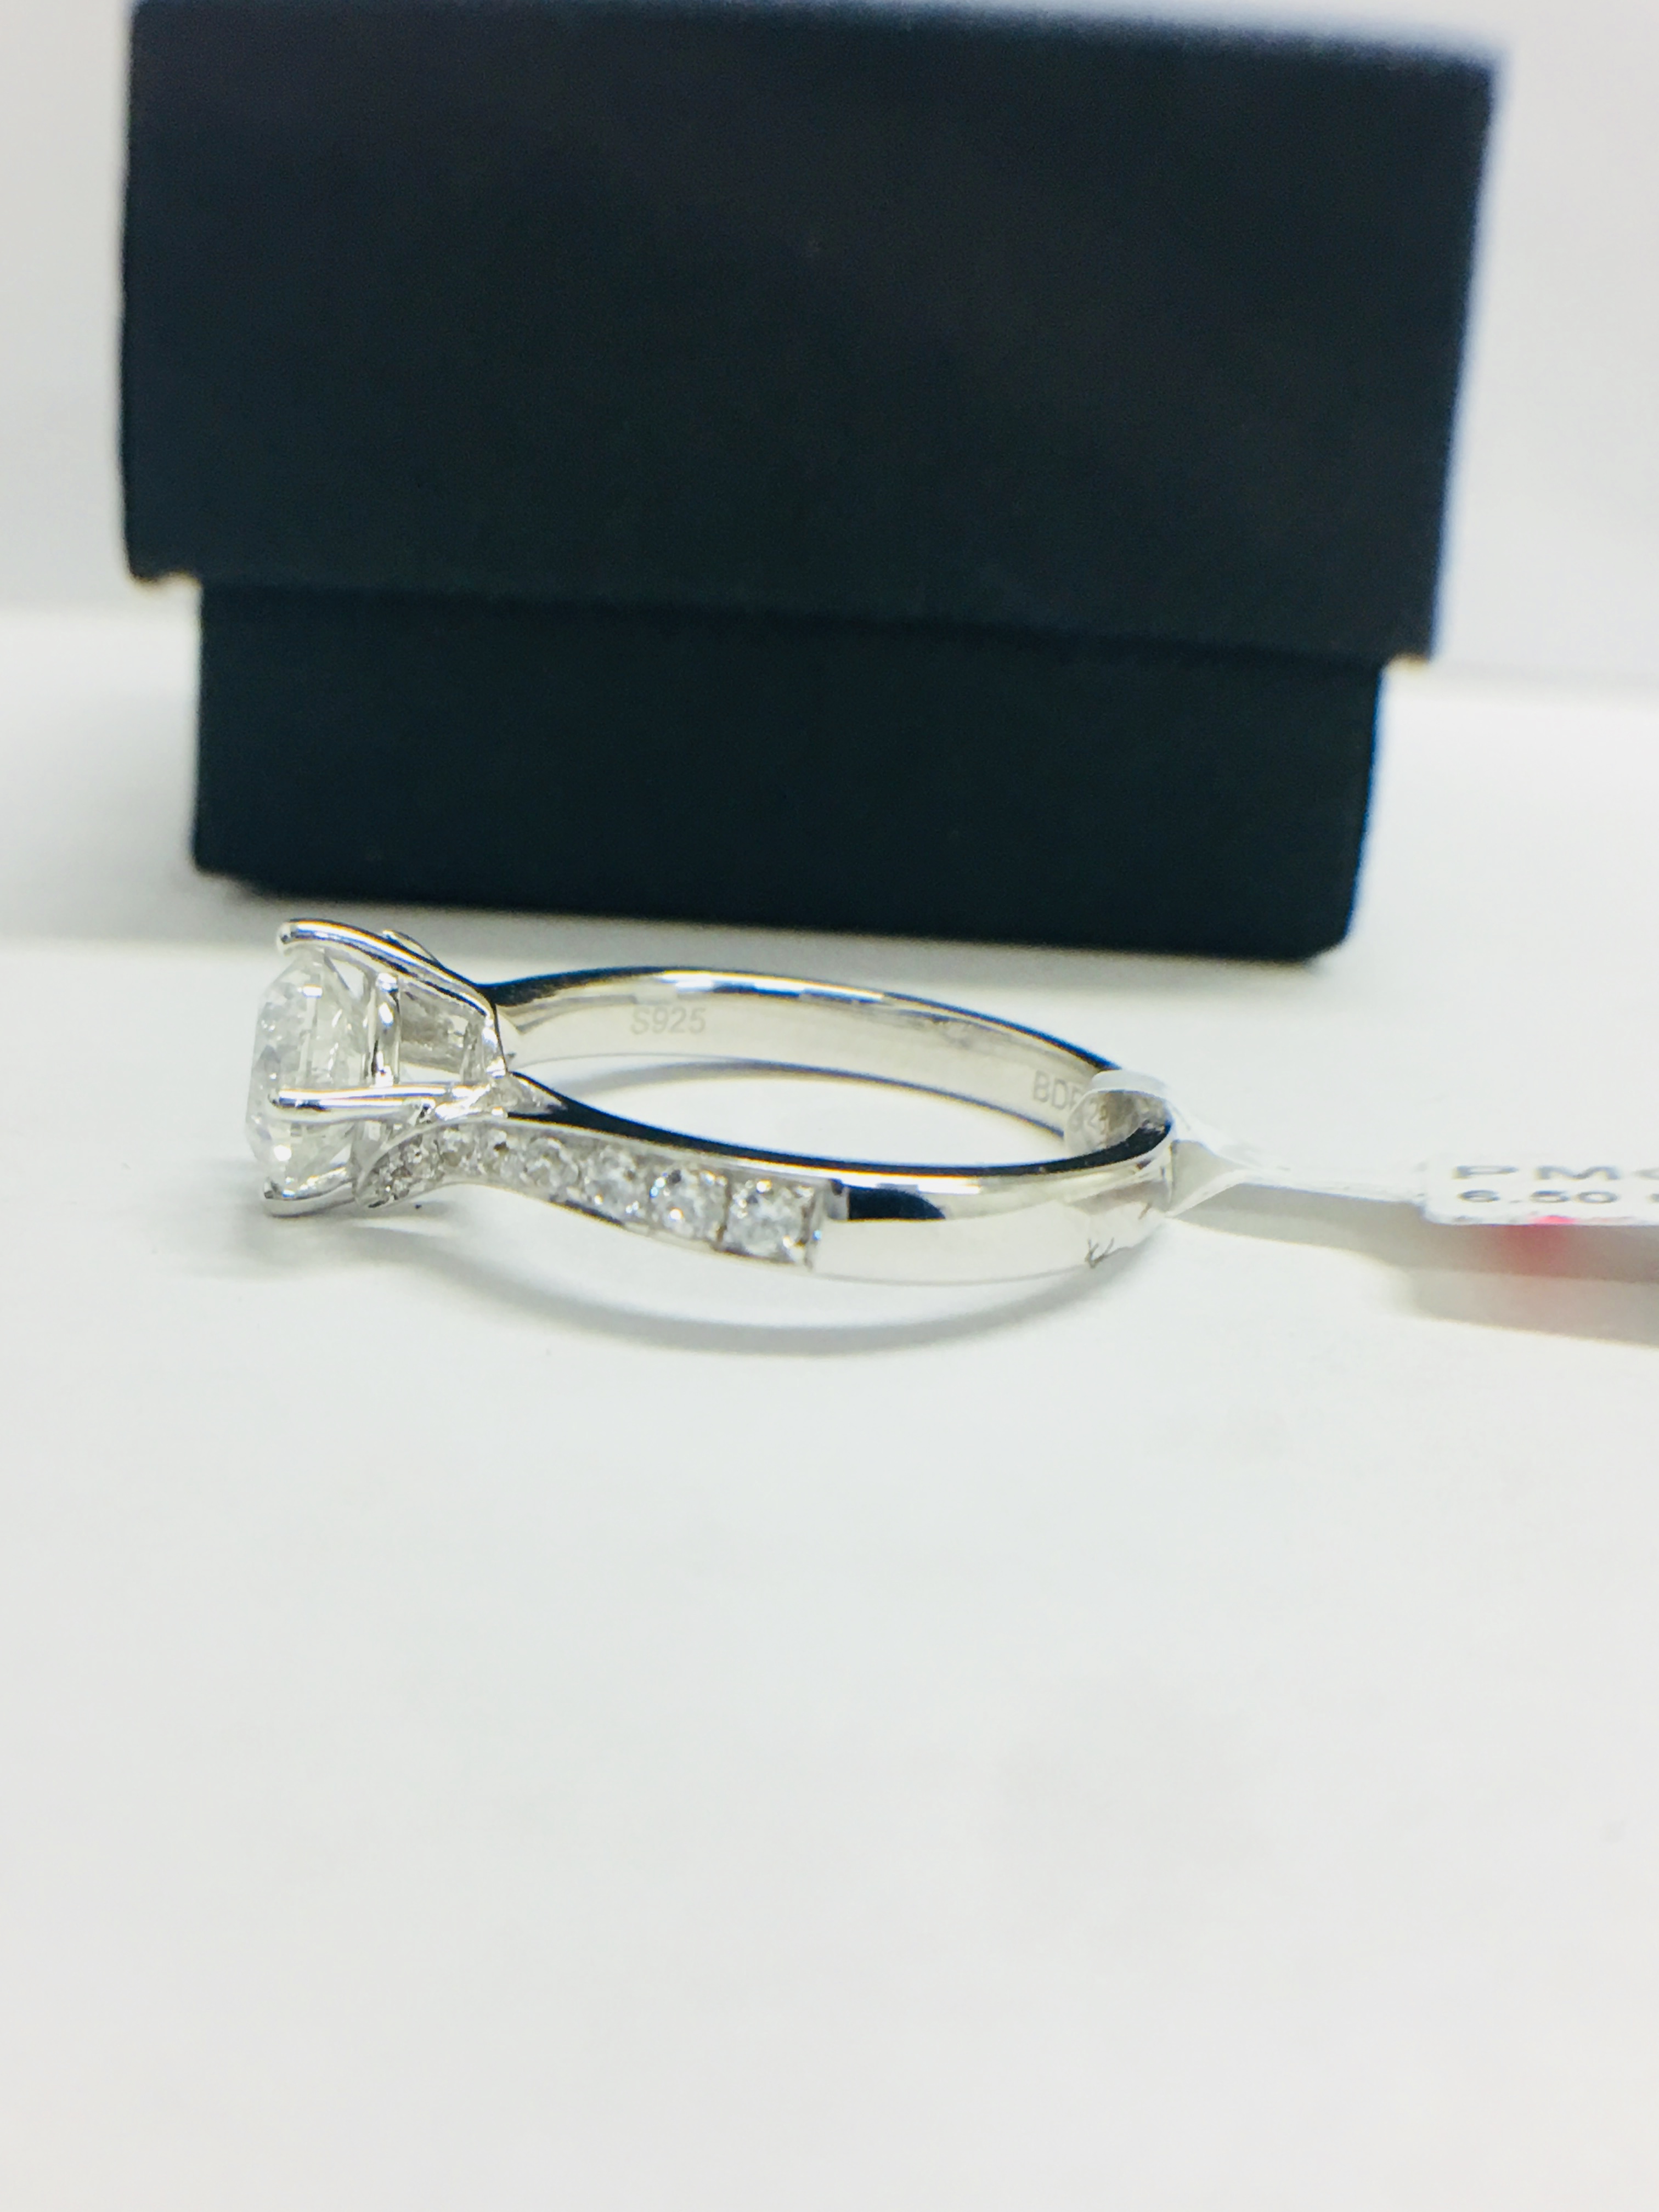 Platinum Diamond Solitaire Ring Art Deco Style (Vintage)1.21Ct Diamond Total,